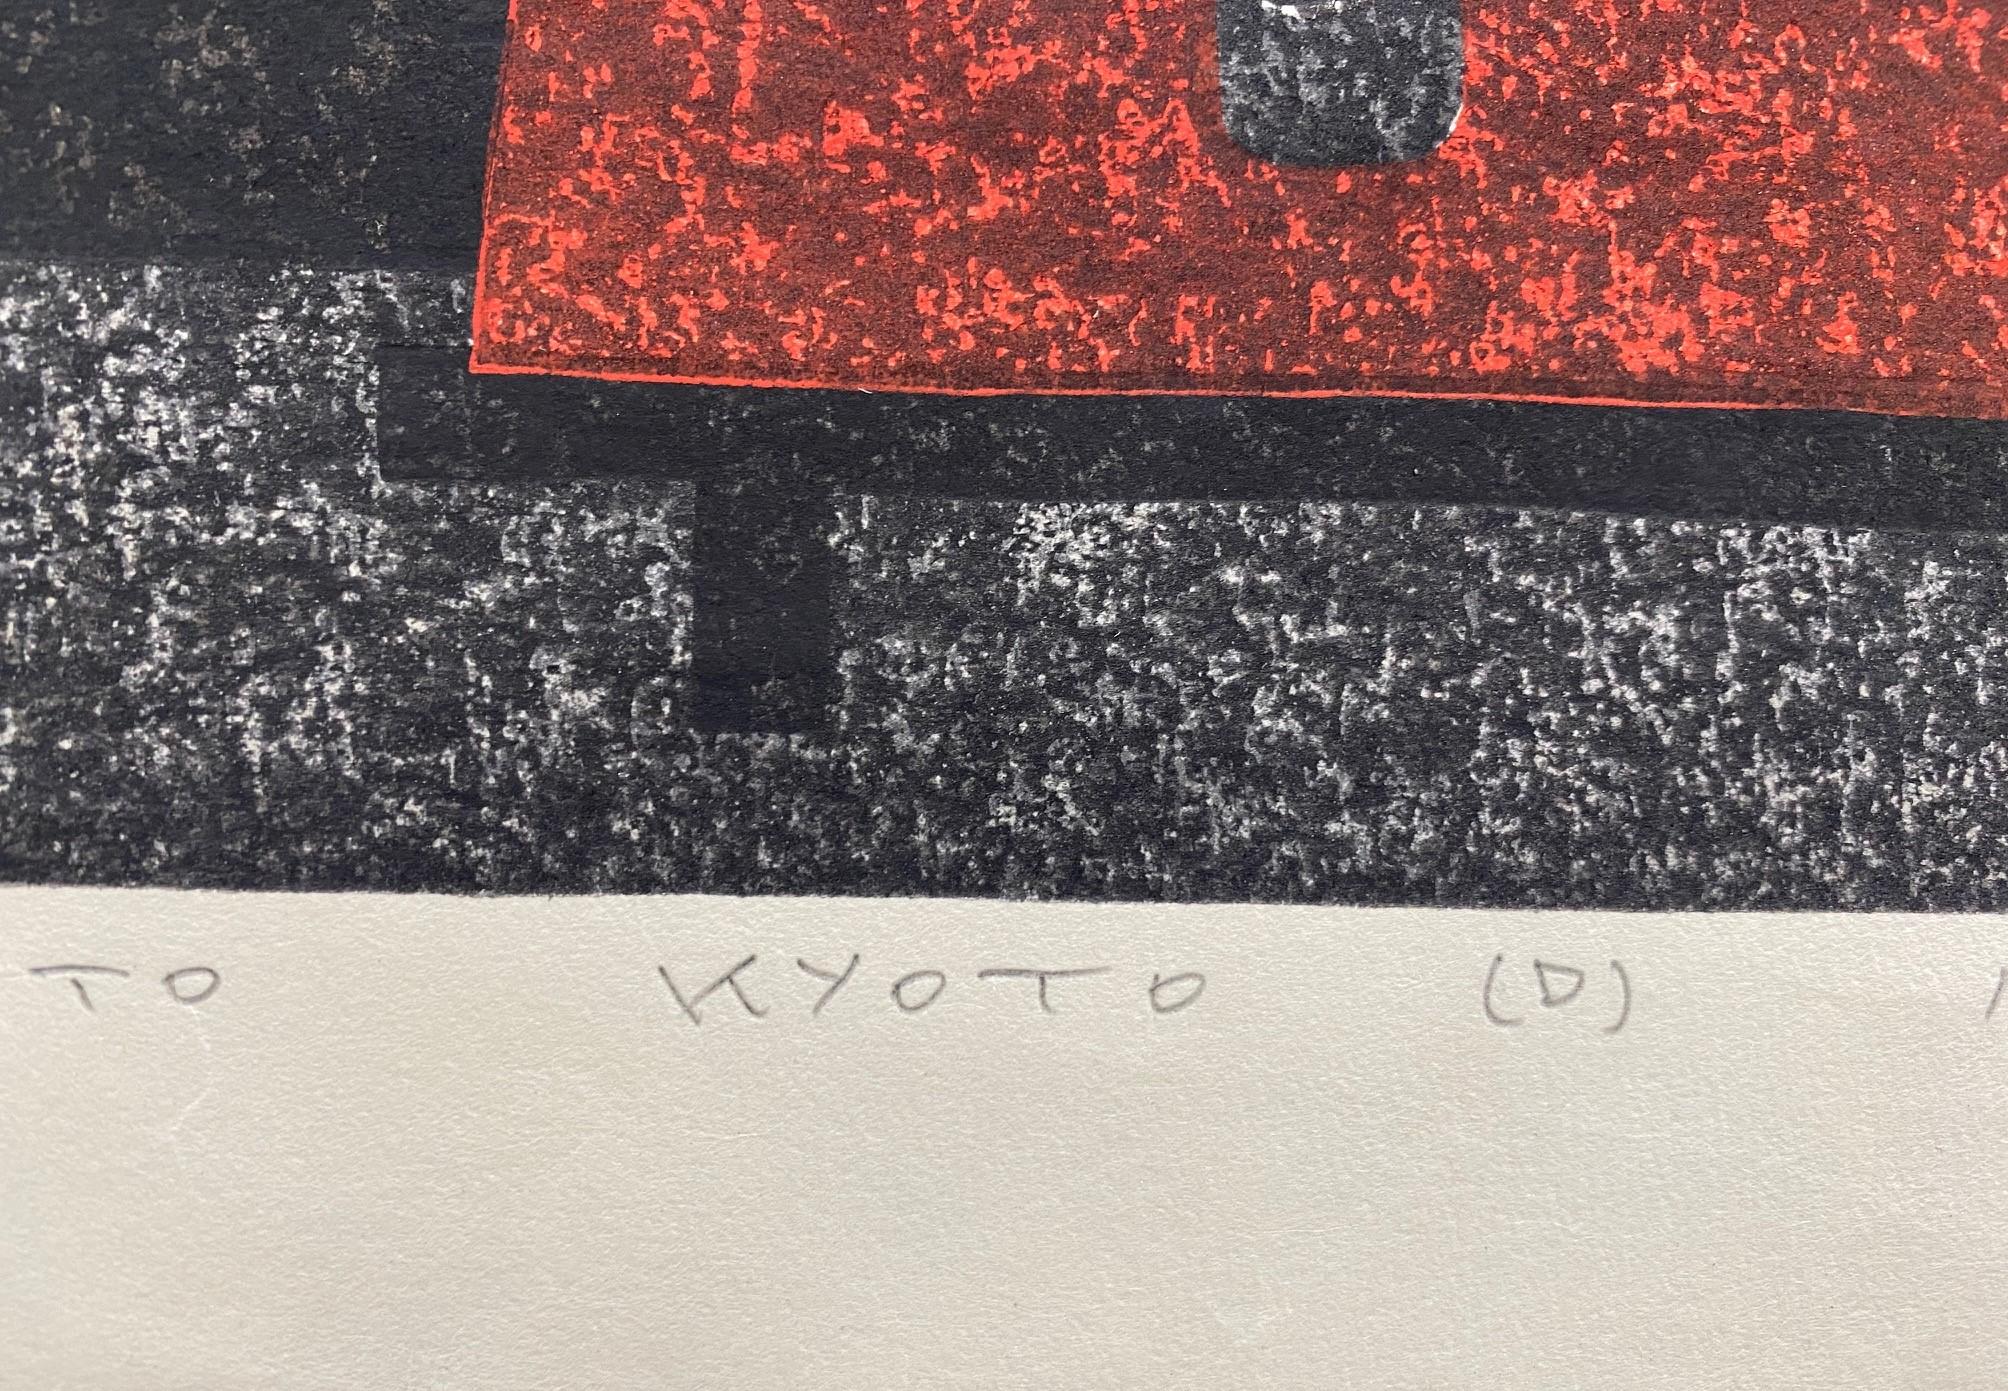 Kiyoshi Saito Signed Limited Edition Japanese Woodblock Print Toriemoto Kyoto D For Sale 4